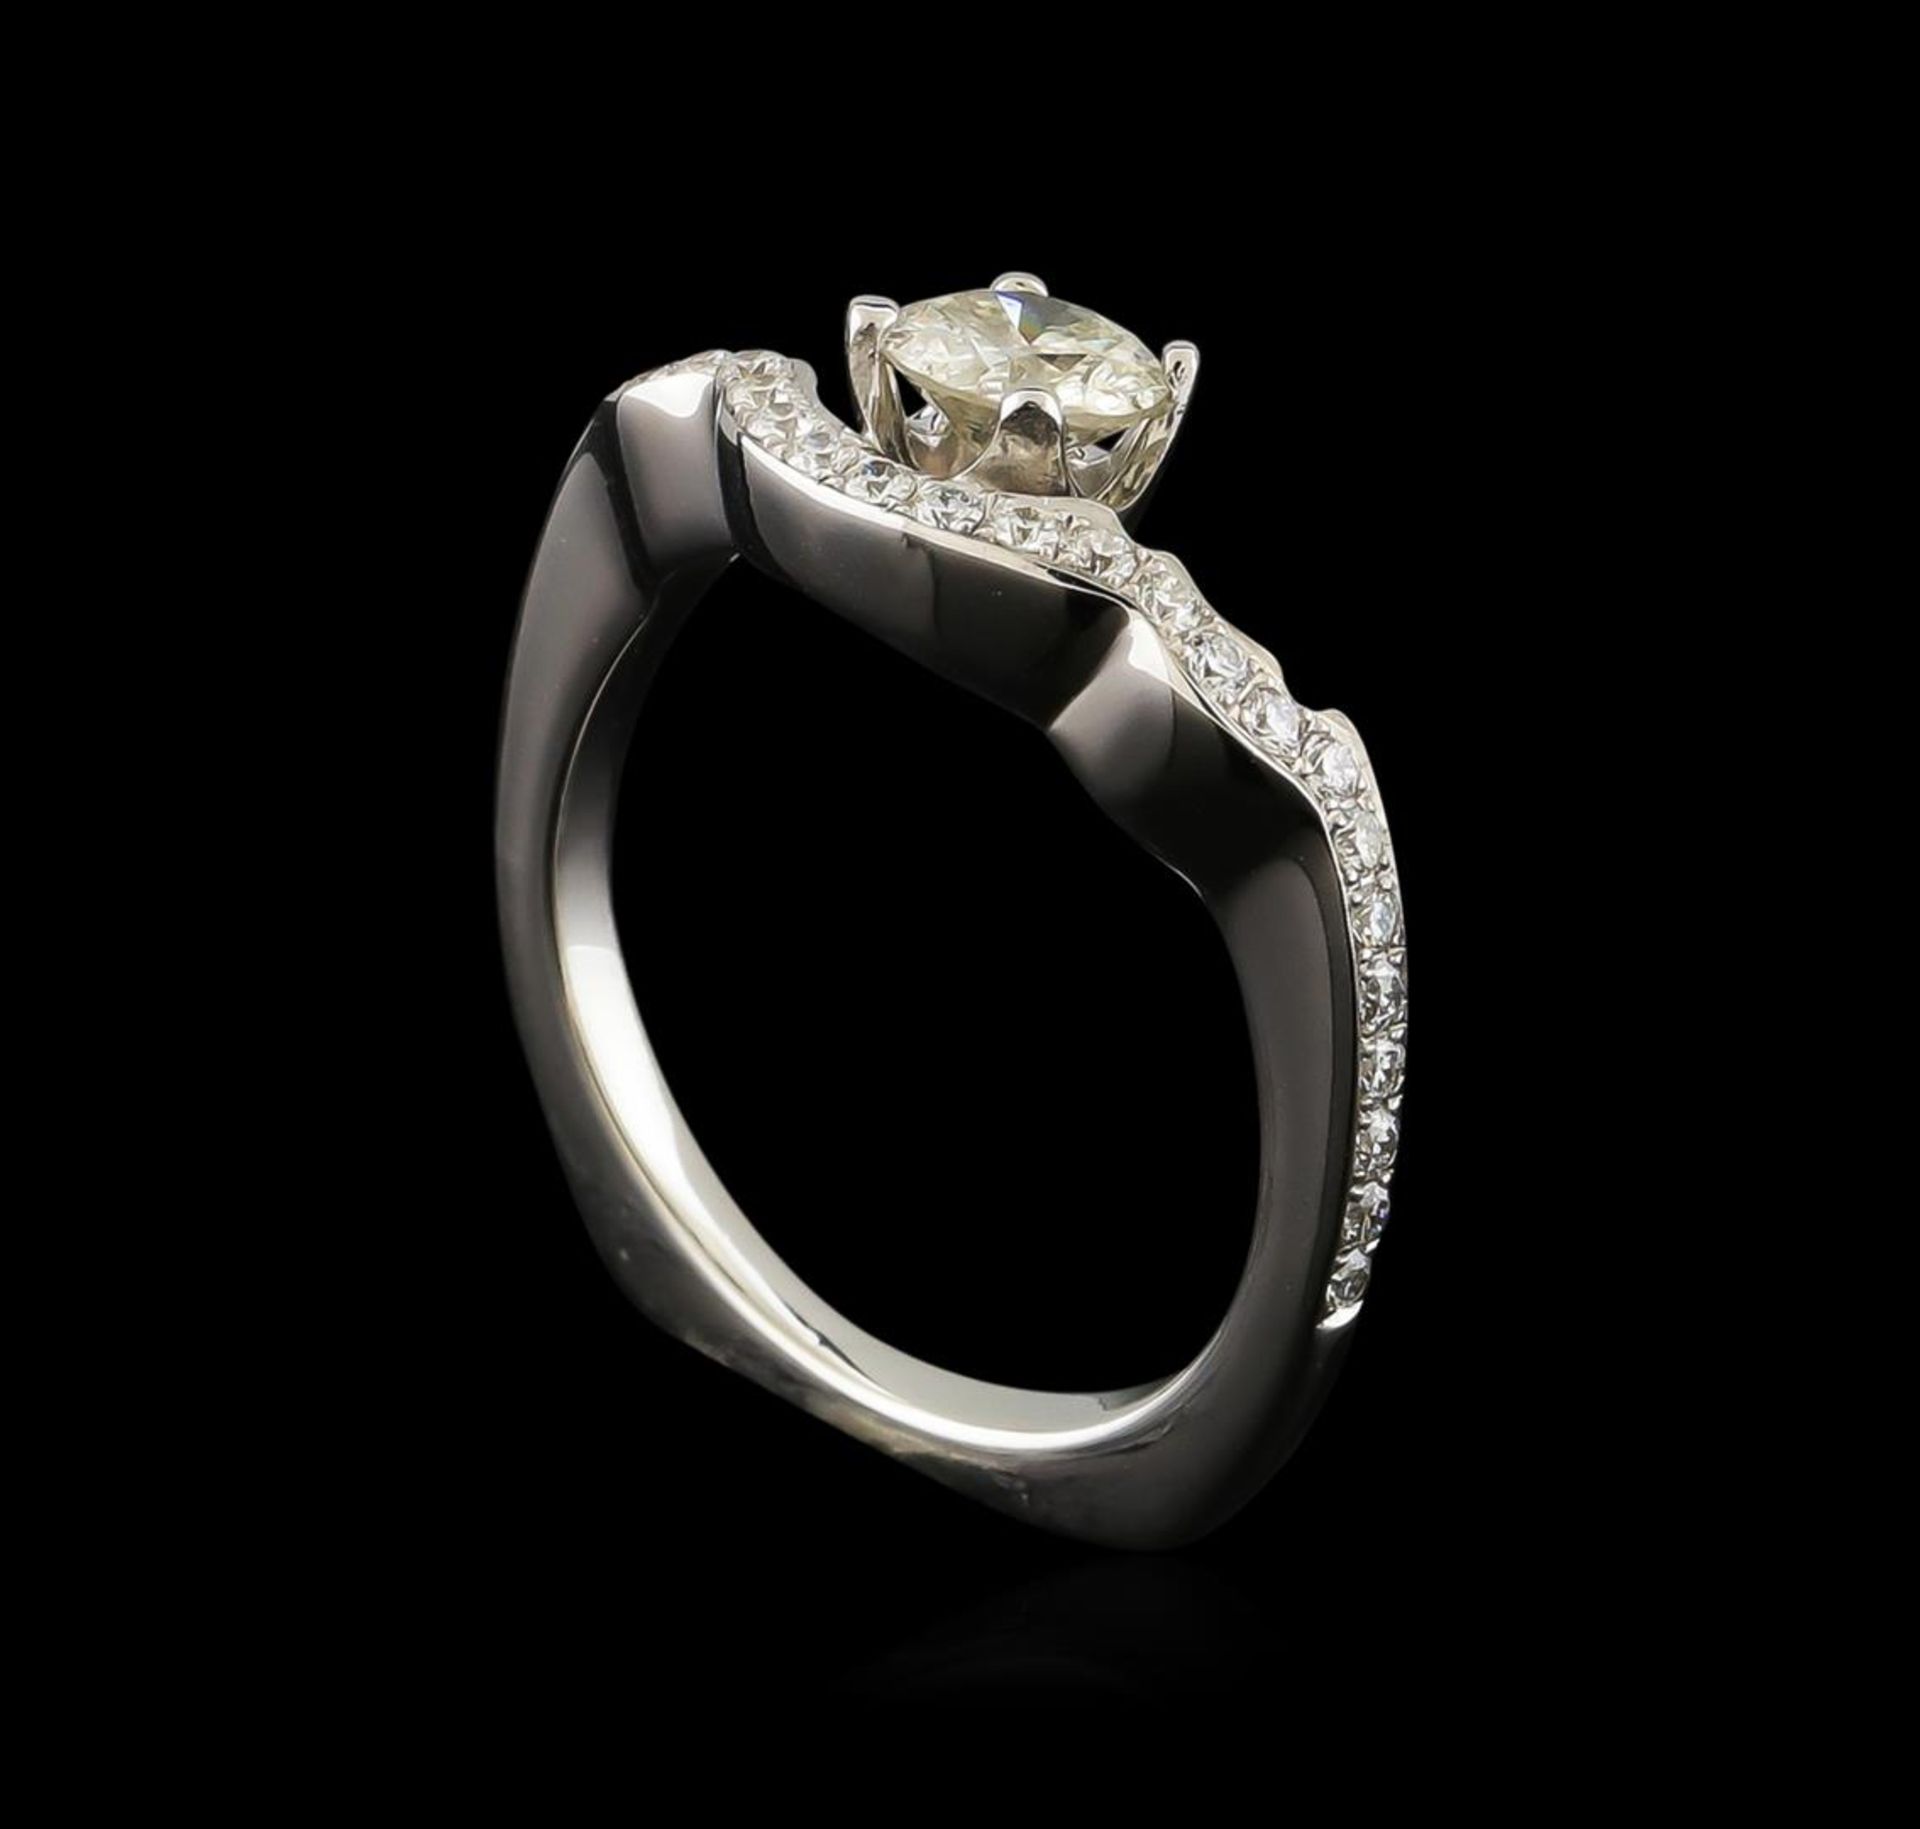 0.70 ctw Diamond Ring - 14KT White Gold - Image 4 of 4